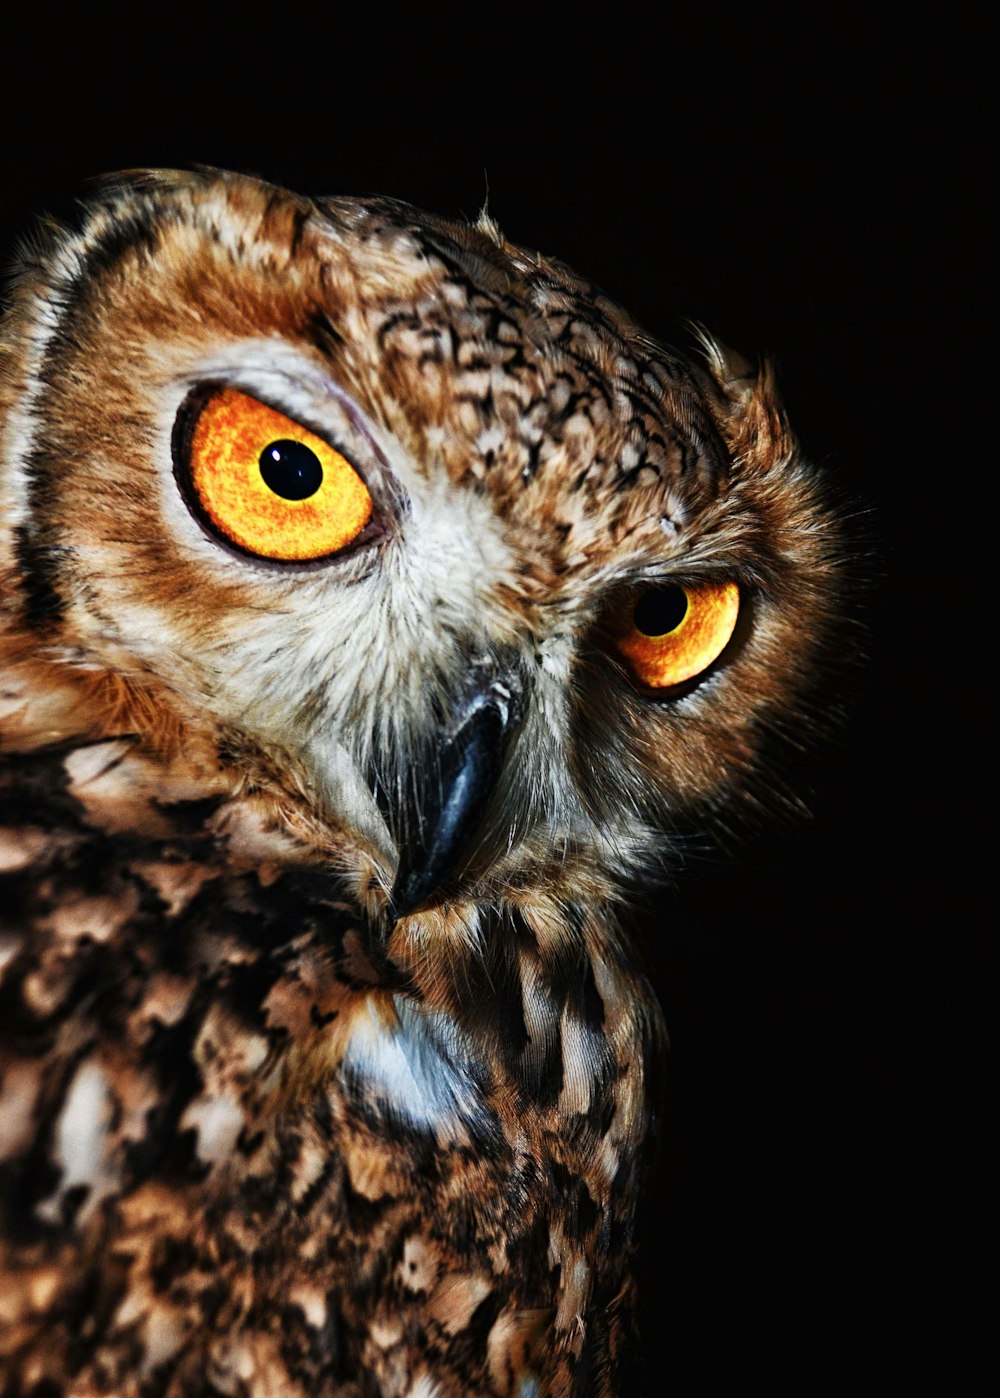 brown owl close-up photo